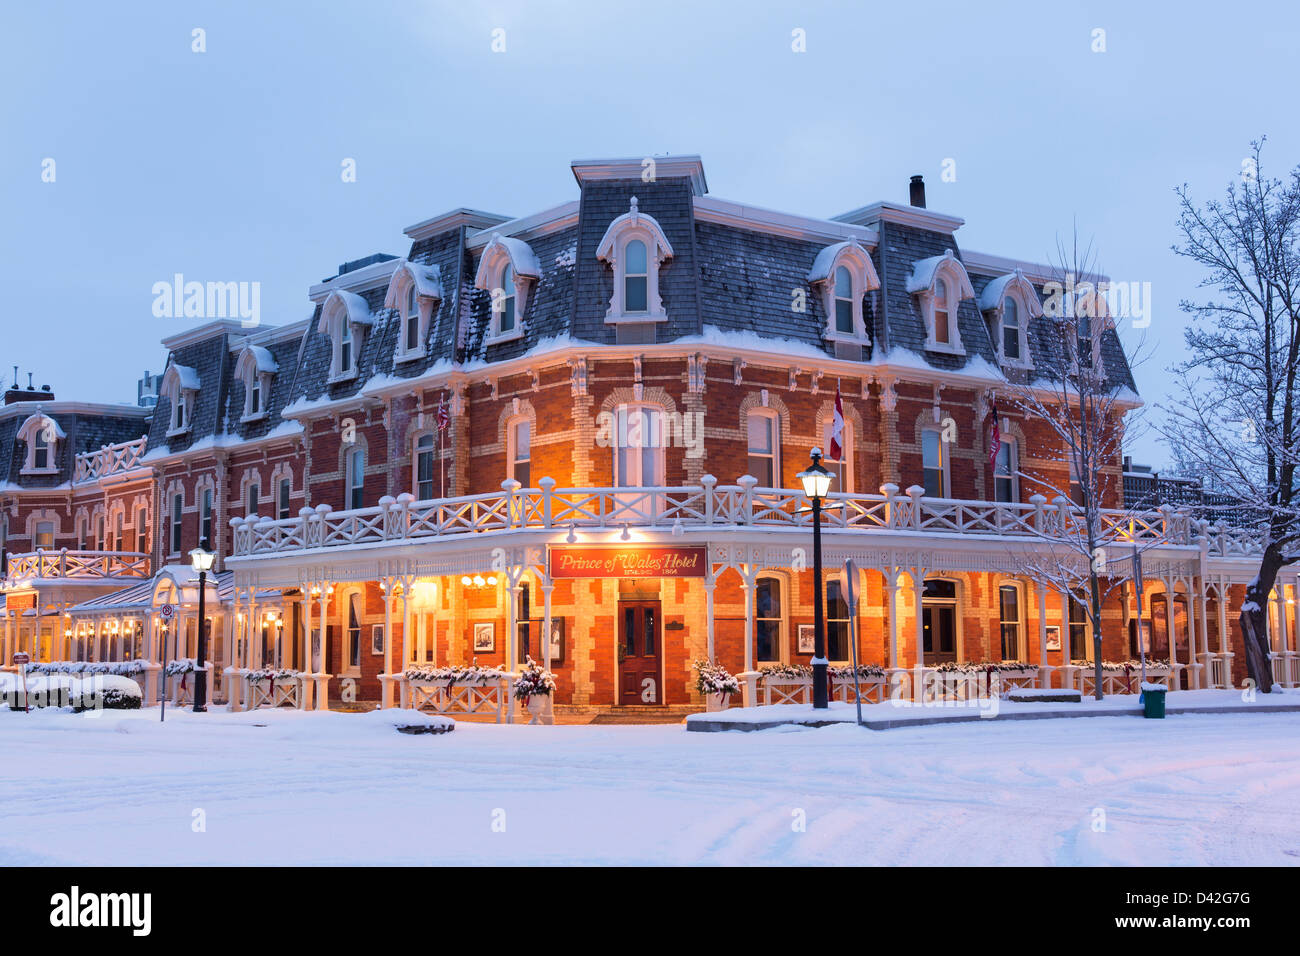 Canada, Ontario, Niagara-on-the-Lake, Prince of Wales Hotel en hiver. Niagara est une destination culturelle et patrimoniale. Banque D'Images